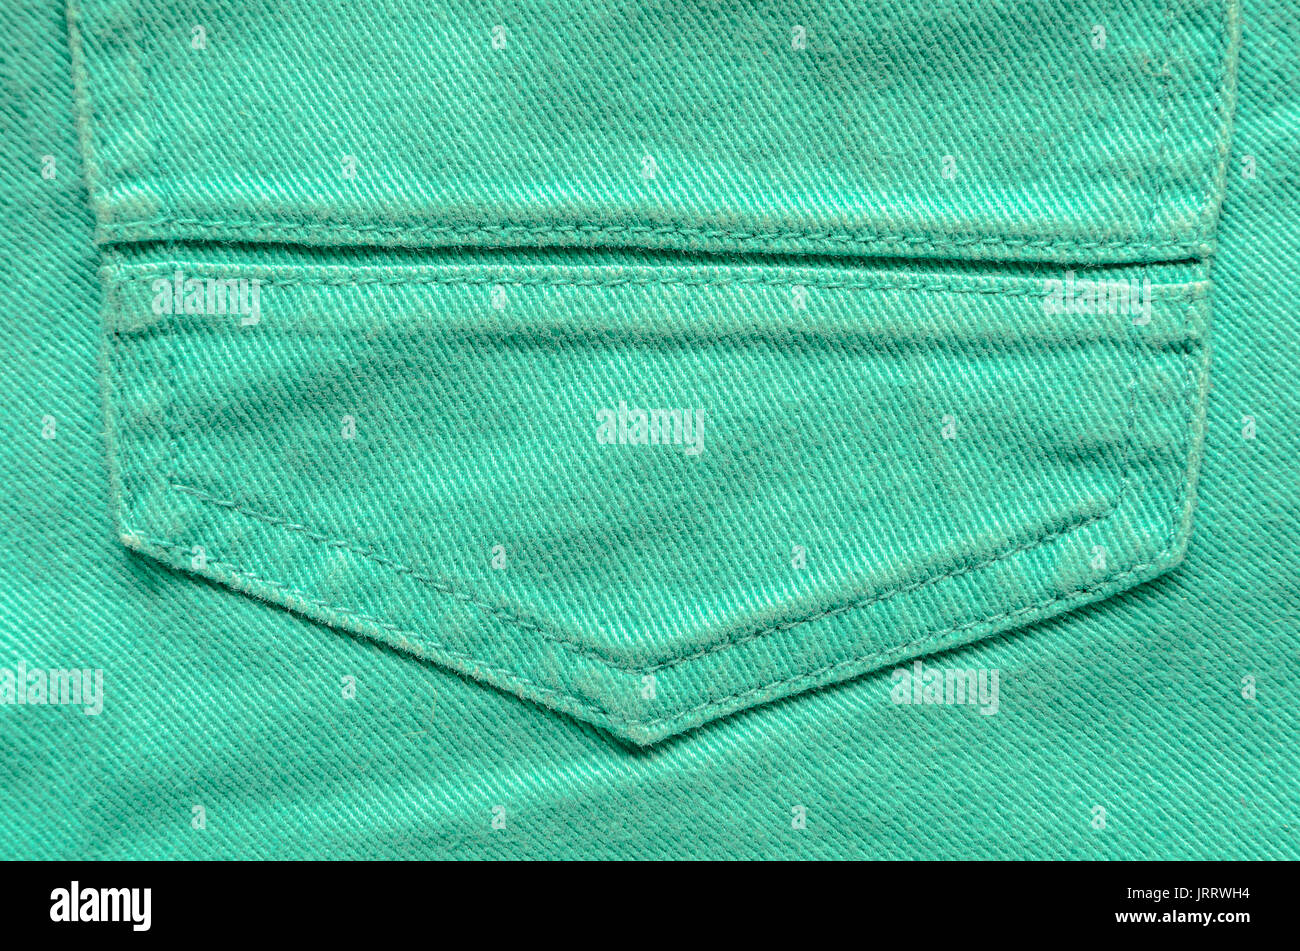 Green Denim Tissue Structure Textile Texture Close-up. Macro shot of ...